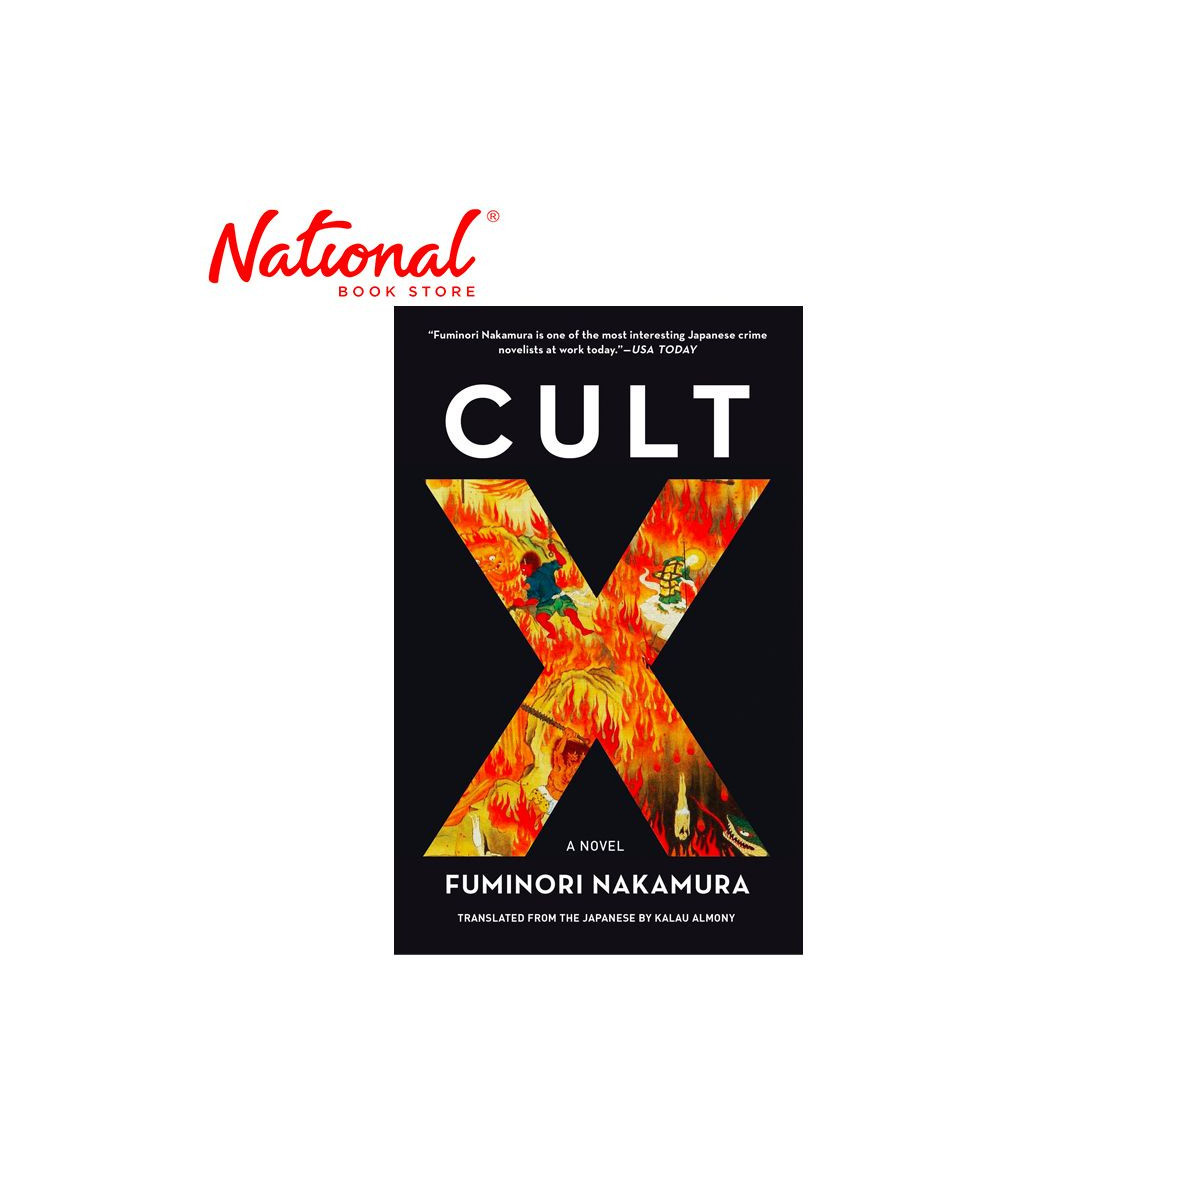 Cult X: A Novel Hardcover by Fuminori Nakamura - Thriller - Mystery - Suspense